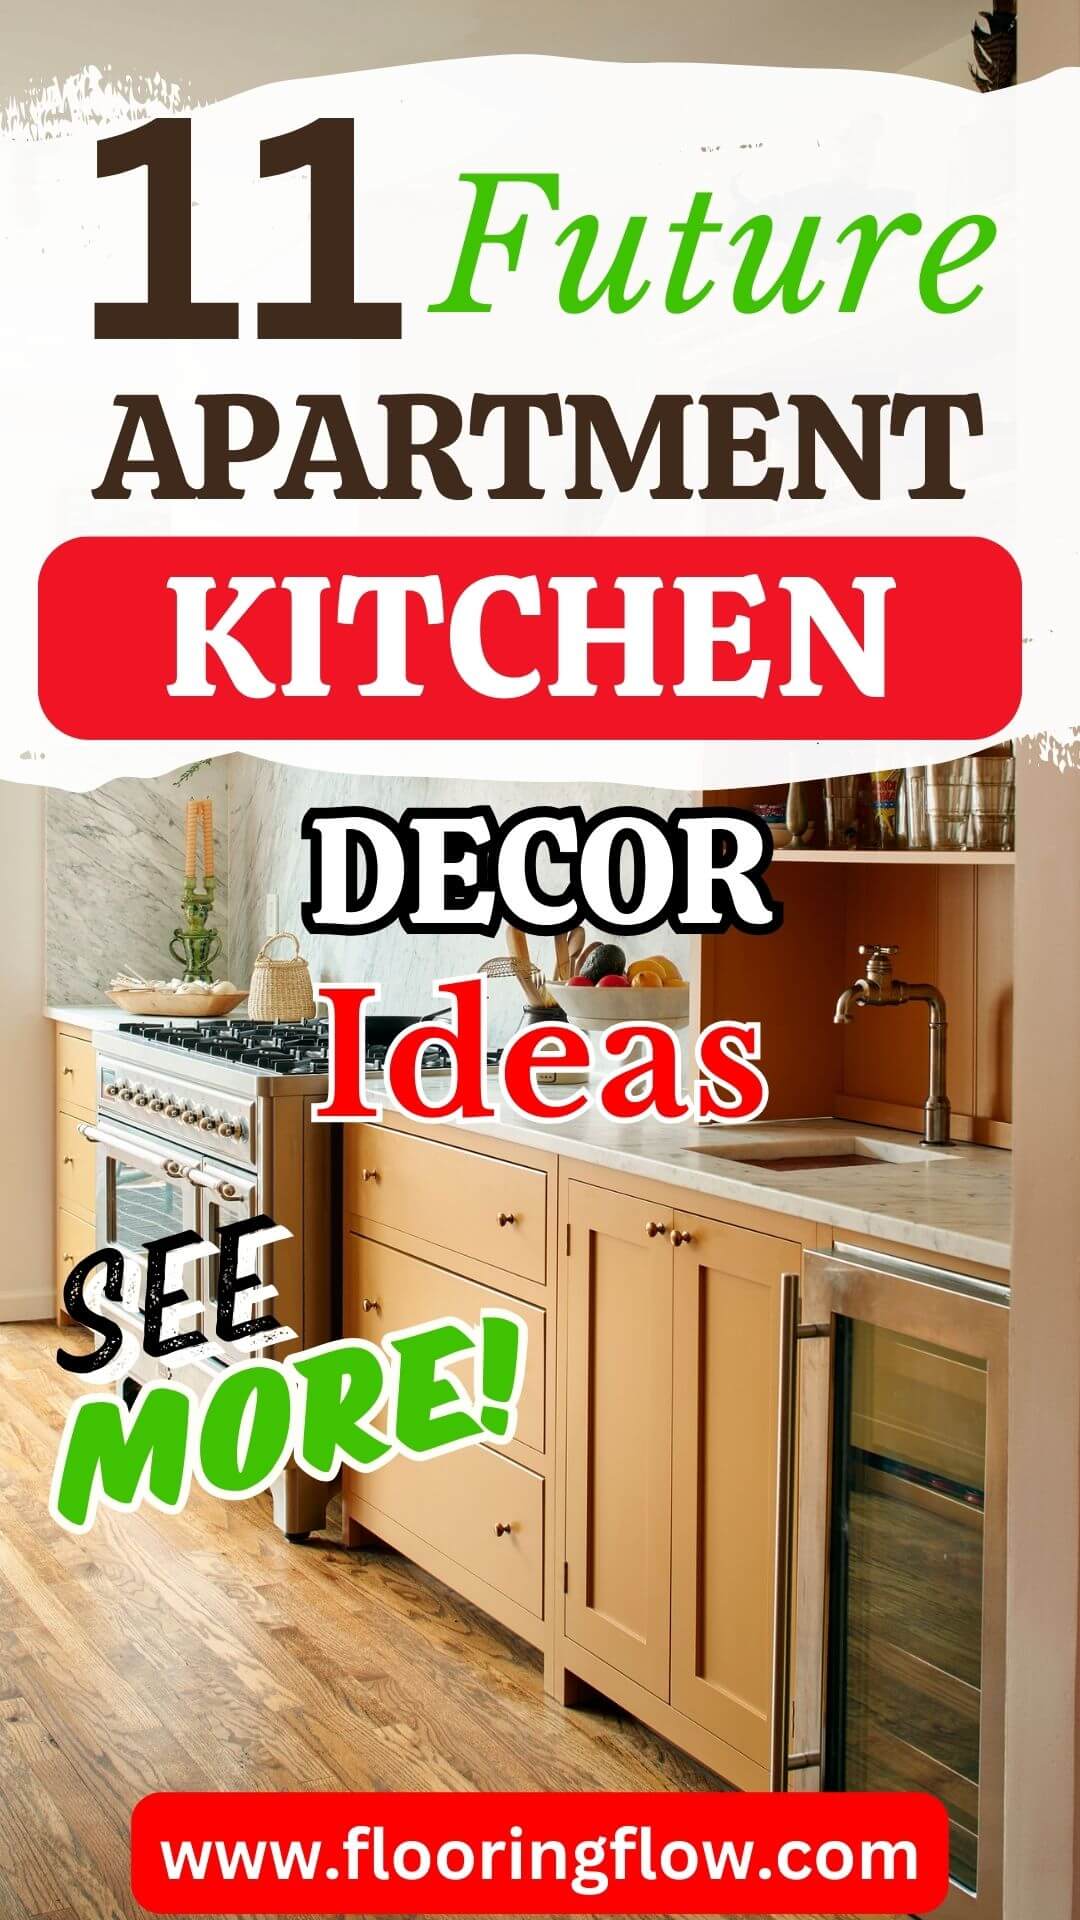 Future Apartment Kitchen Decor Ideas 